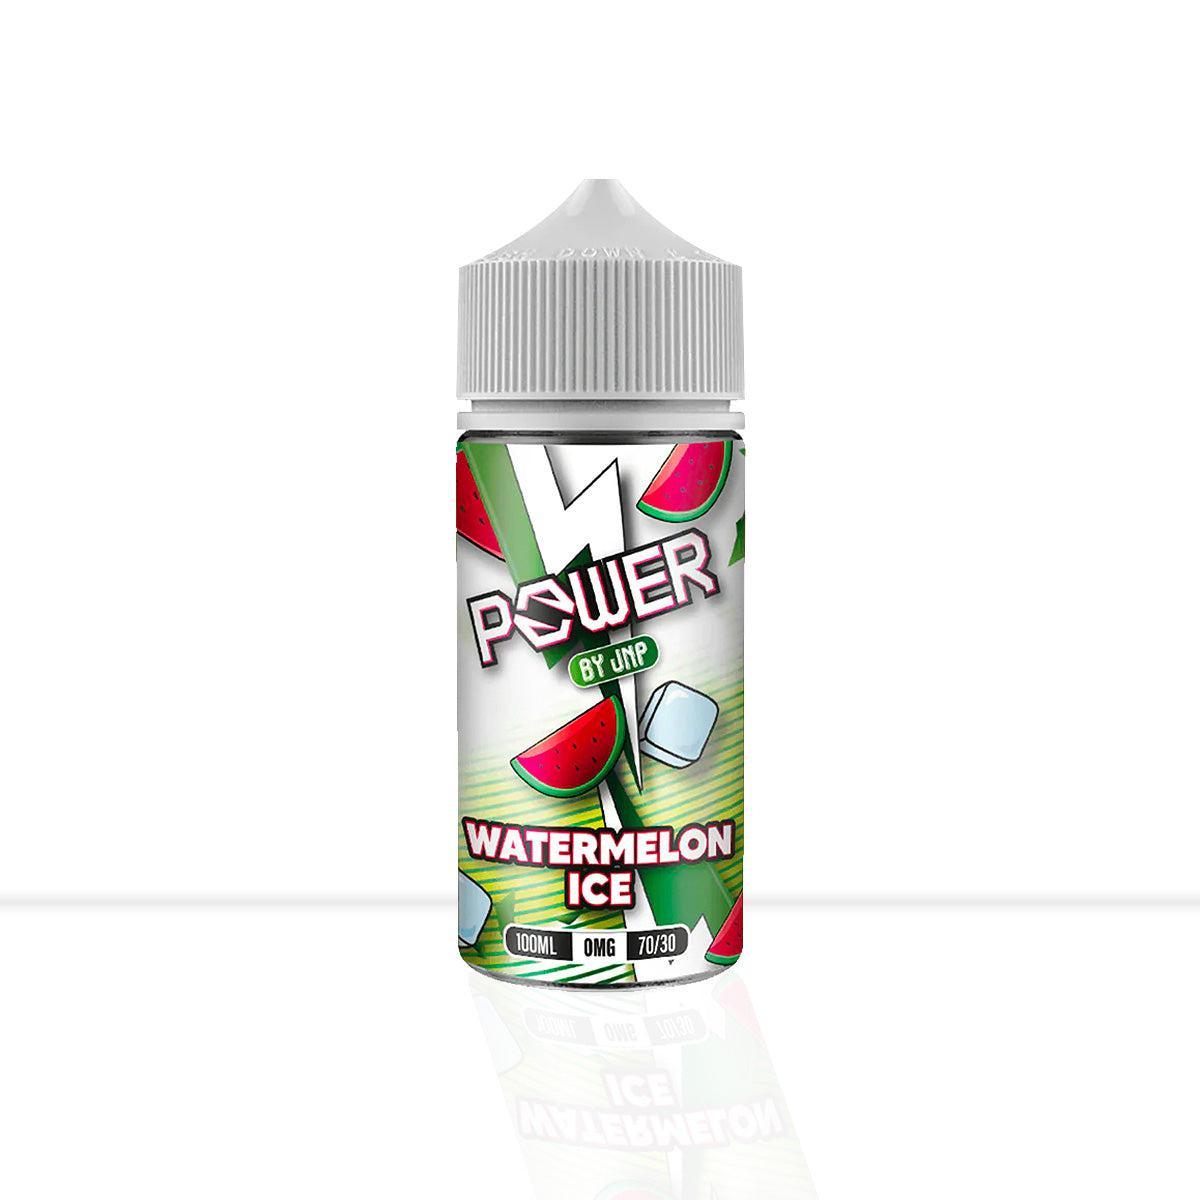 Watermelon Ice Shortfill Juice N Power - E Liquid